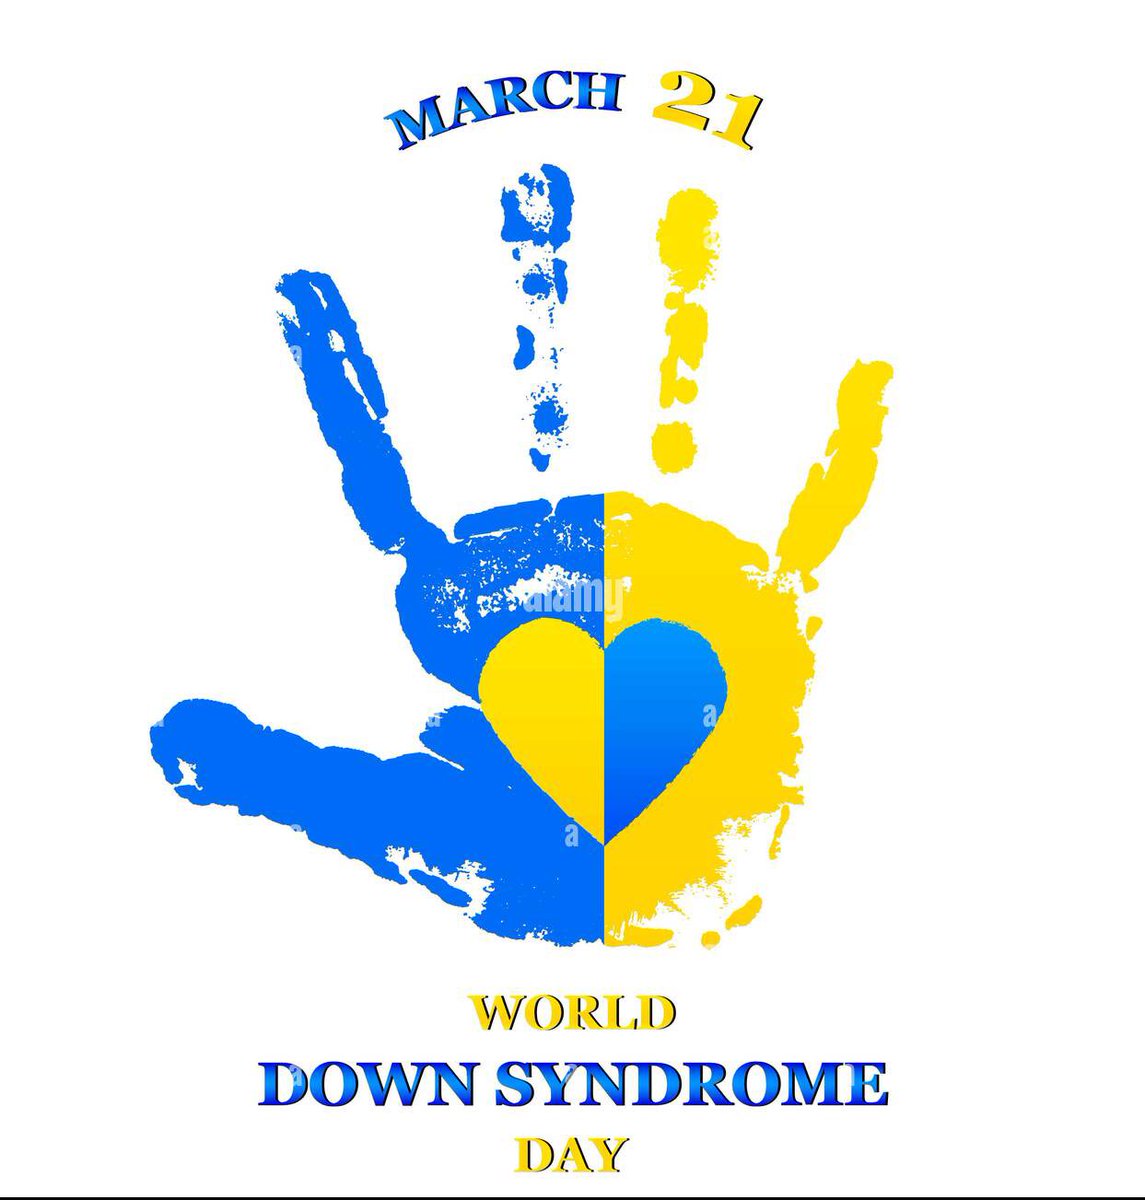 Down Syndrome Lives Matter 💙💛 

#WorldDownSyndromeDay